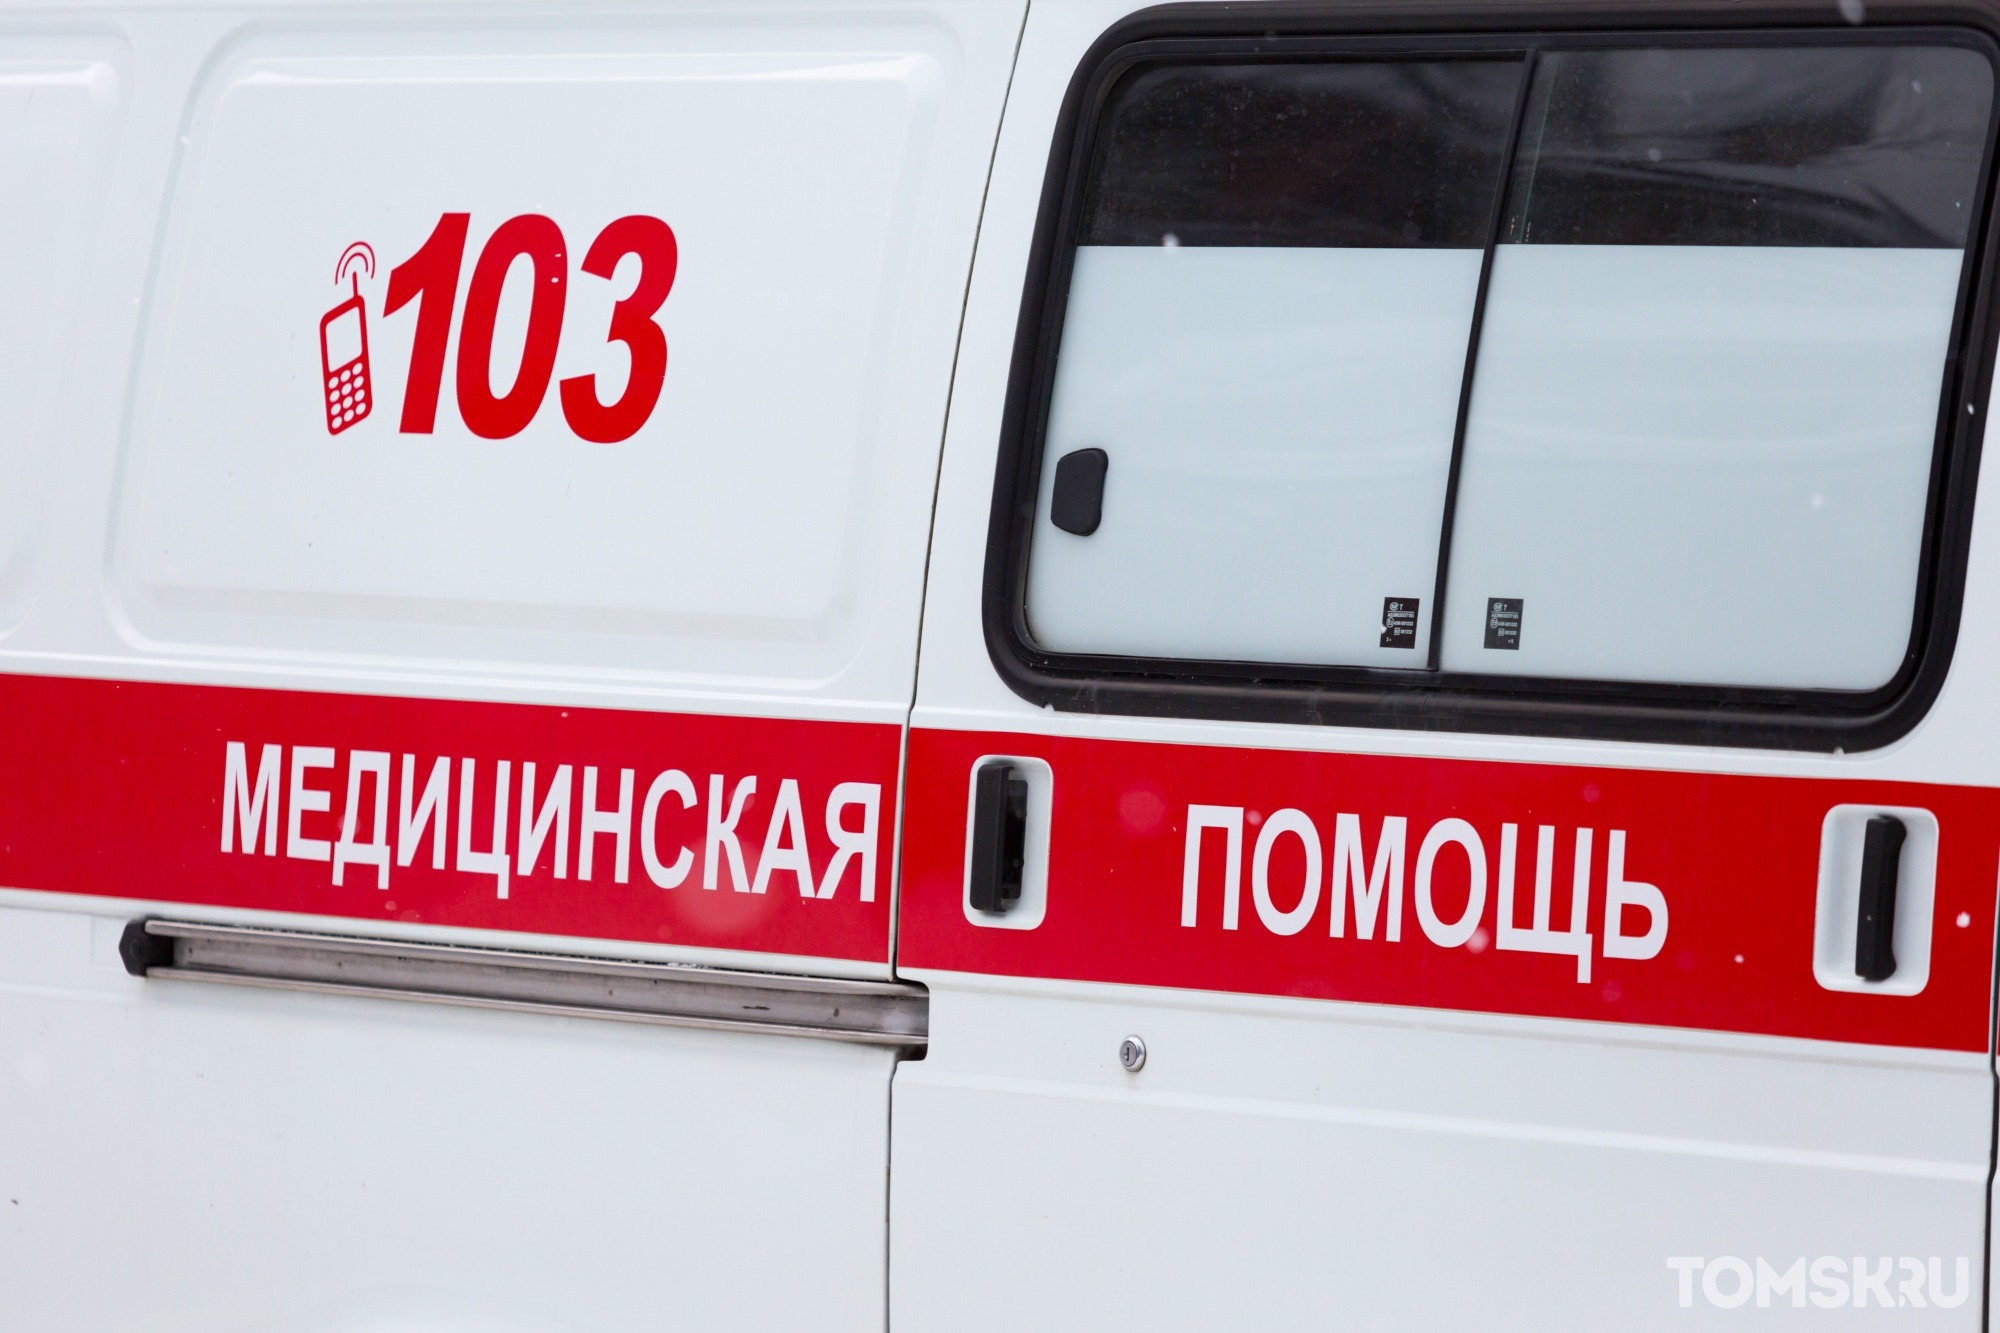 Грузовик врезался в столб на окраине Томска. Есть пострадавший